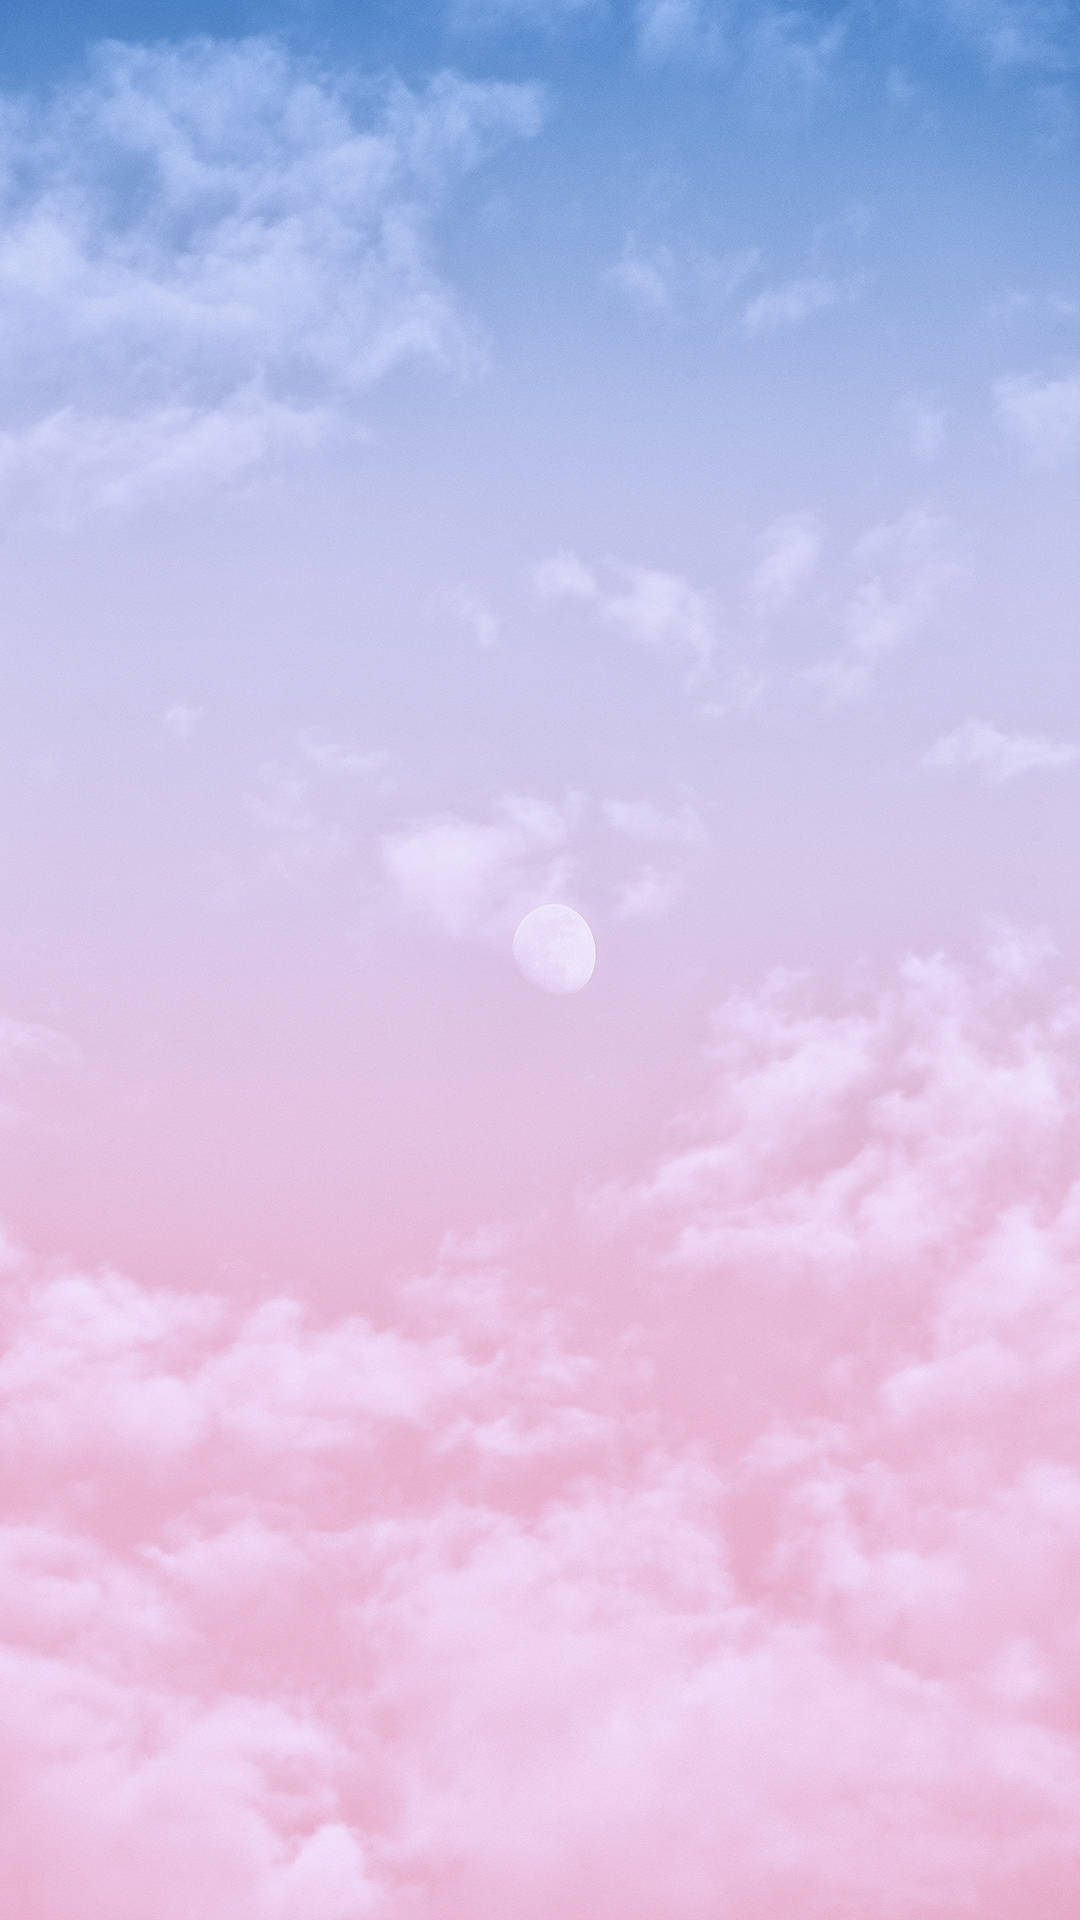 Instagram Story Pastel Cloudy Sky Wallpaper